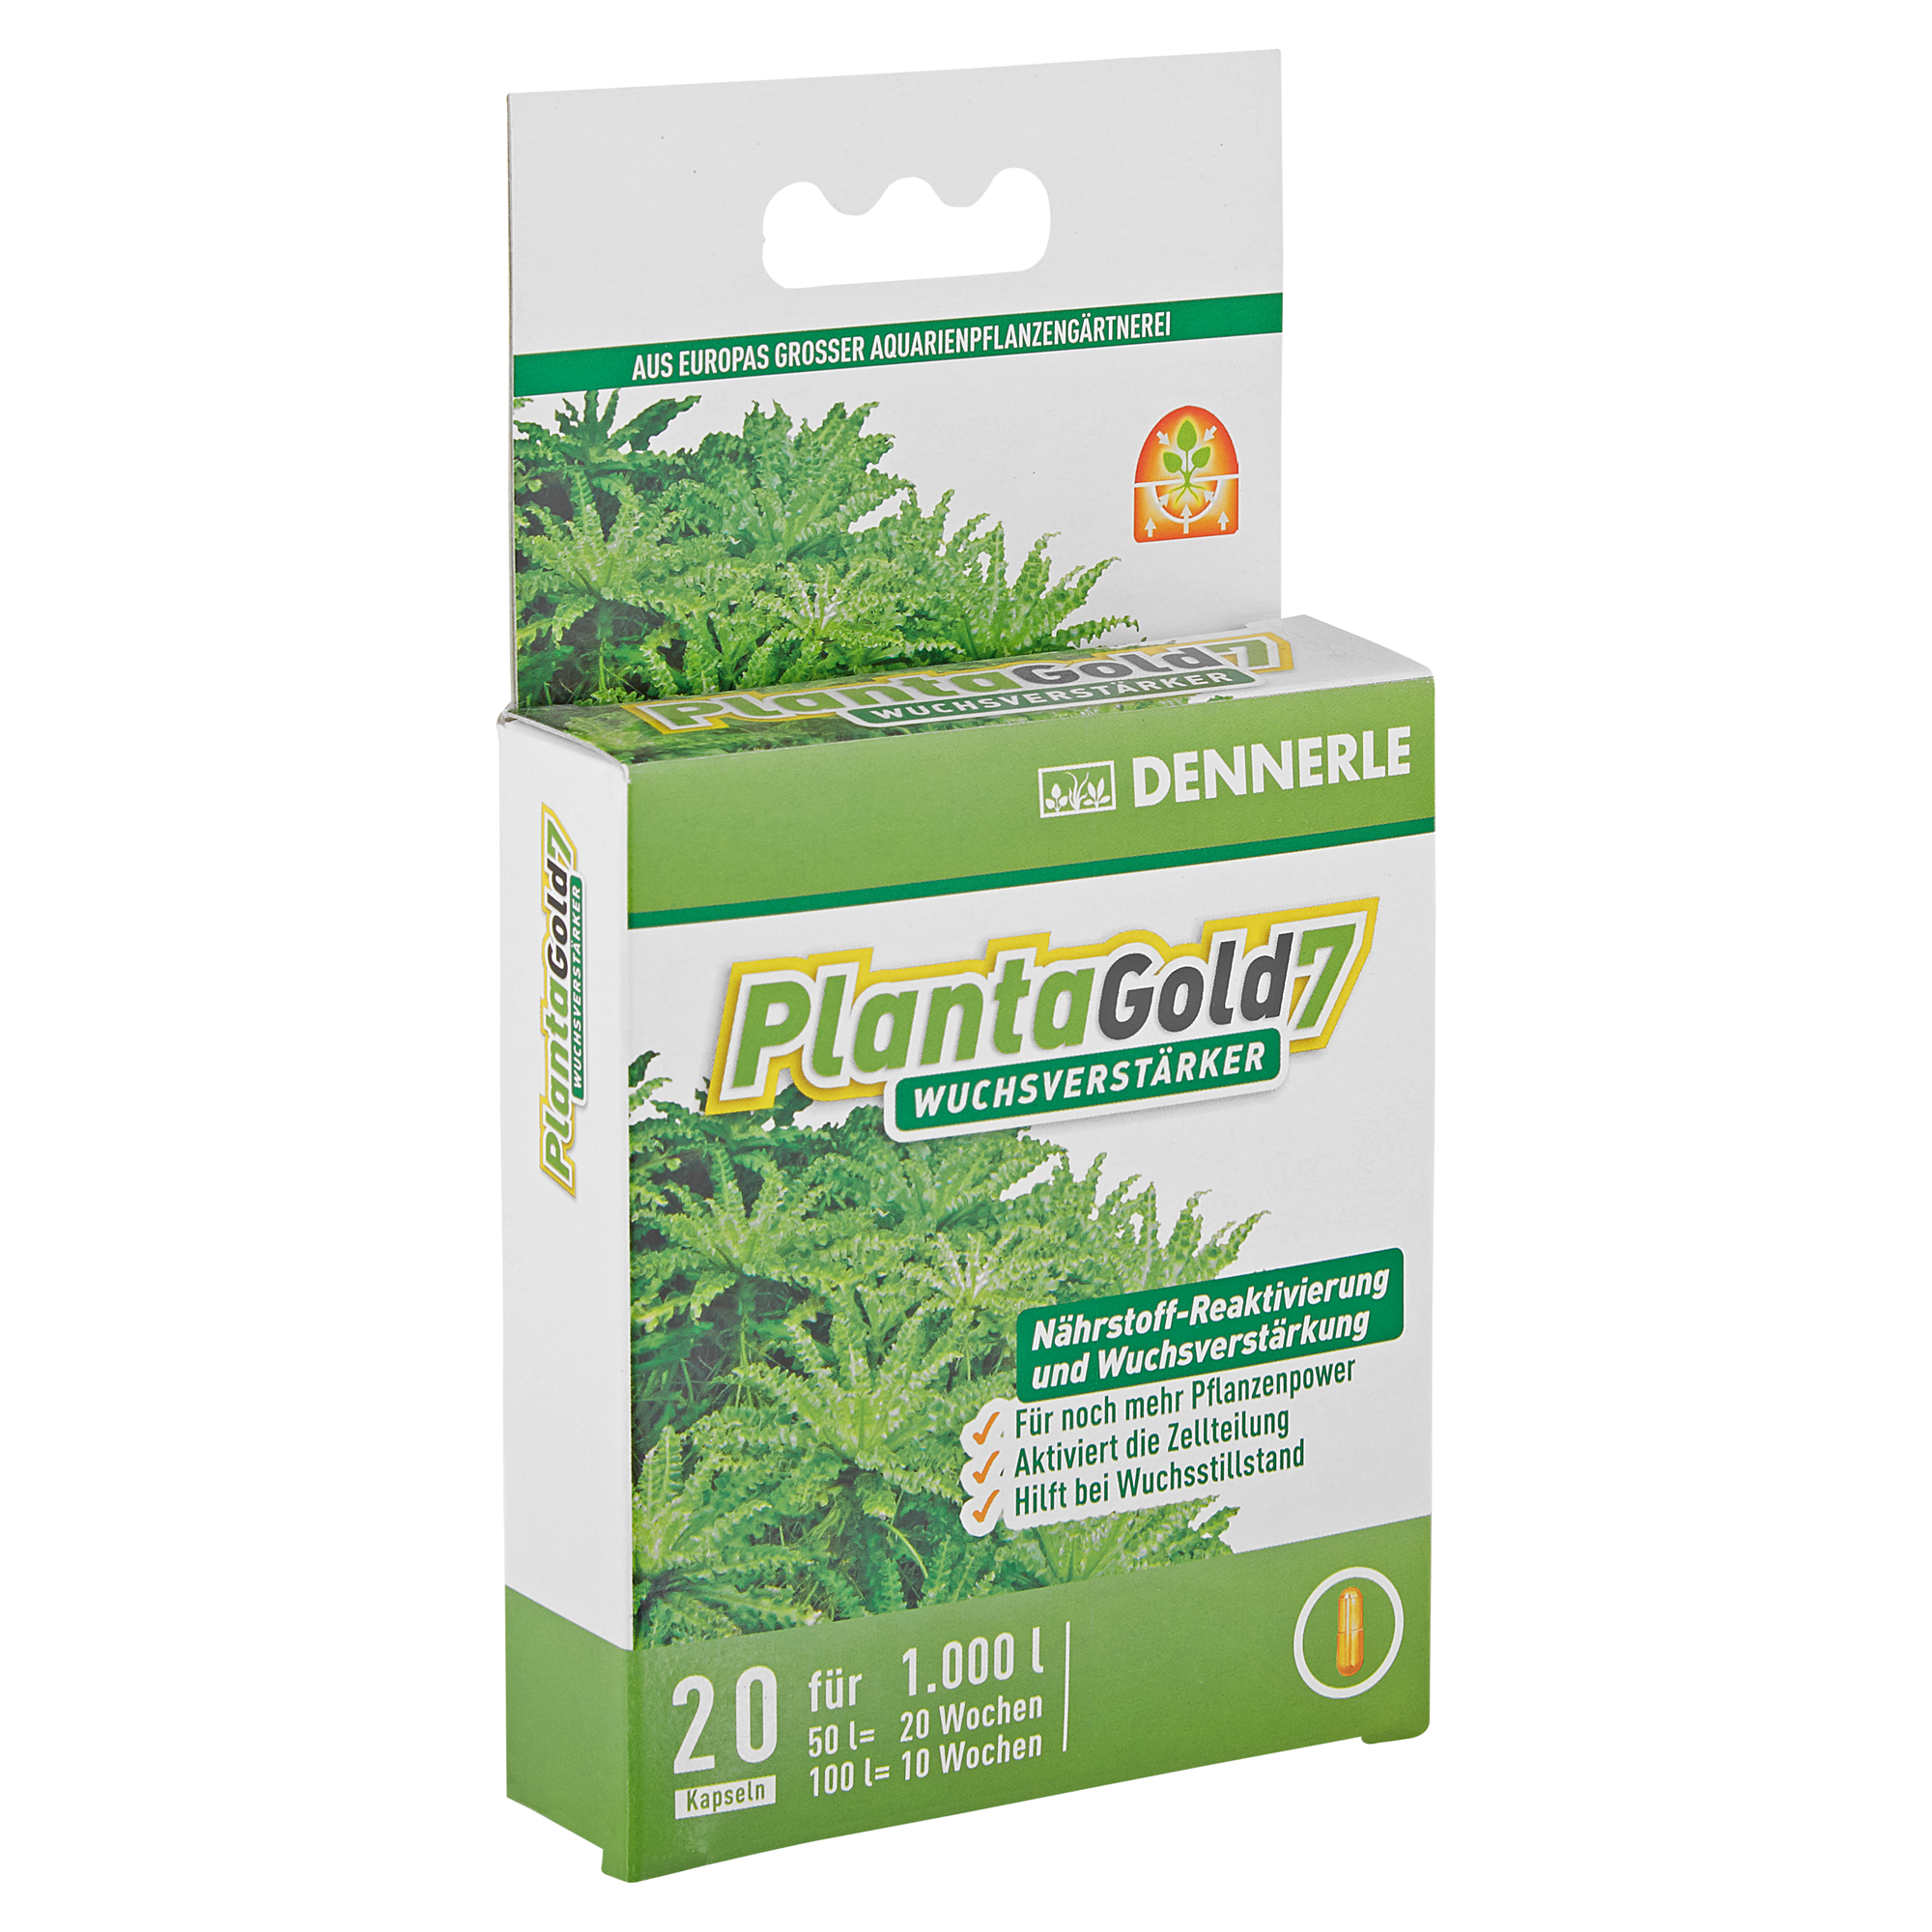 Wuchsverstärker "PlantaGold 7" 20 Stück + product picture